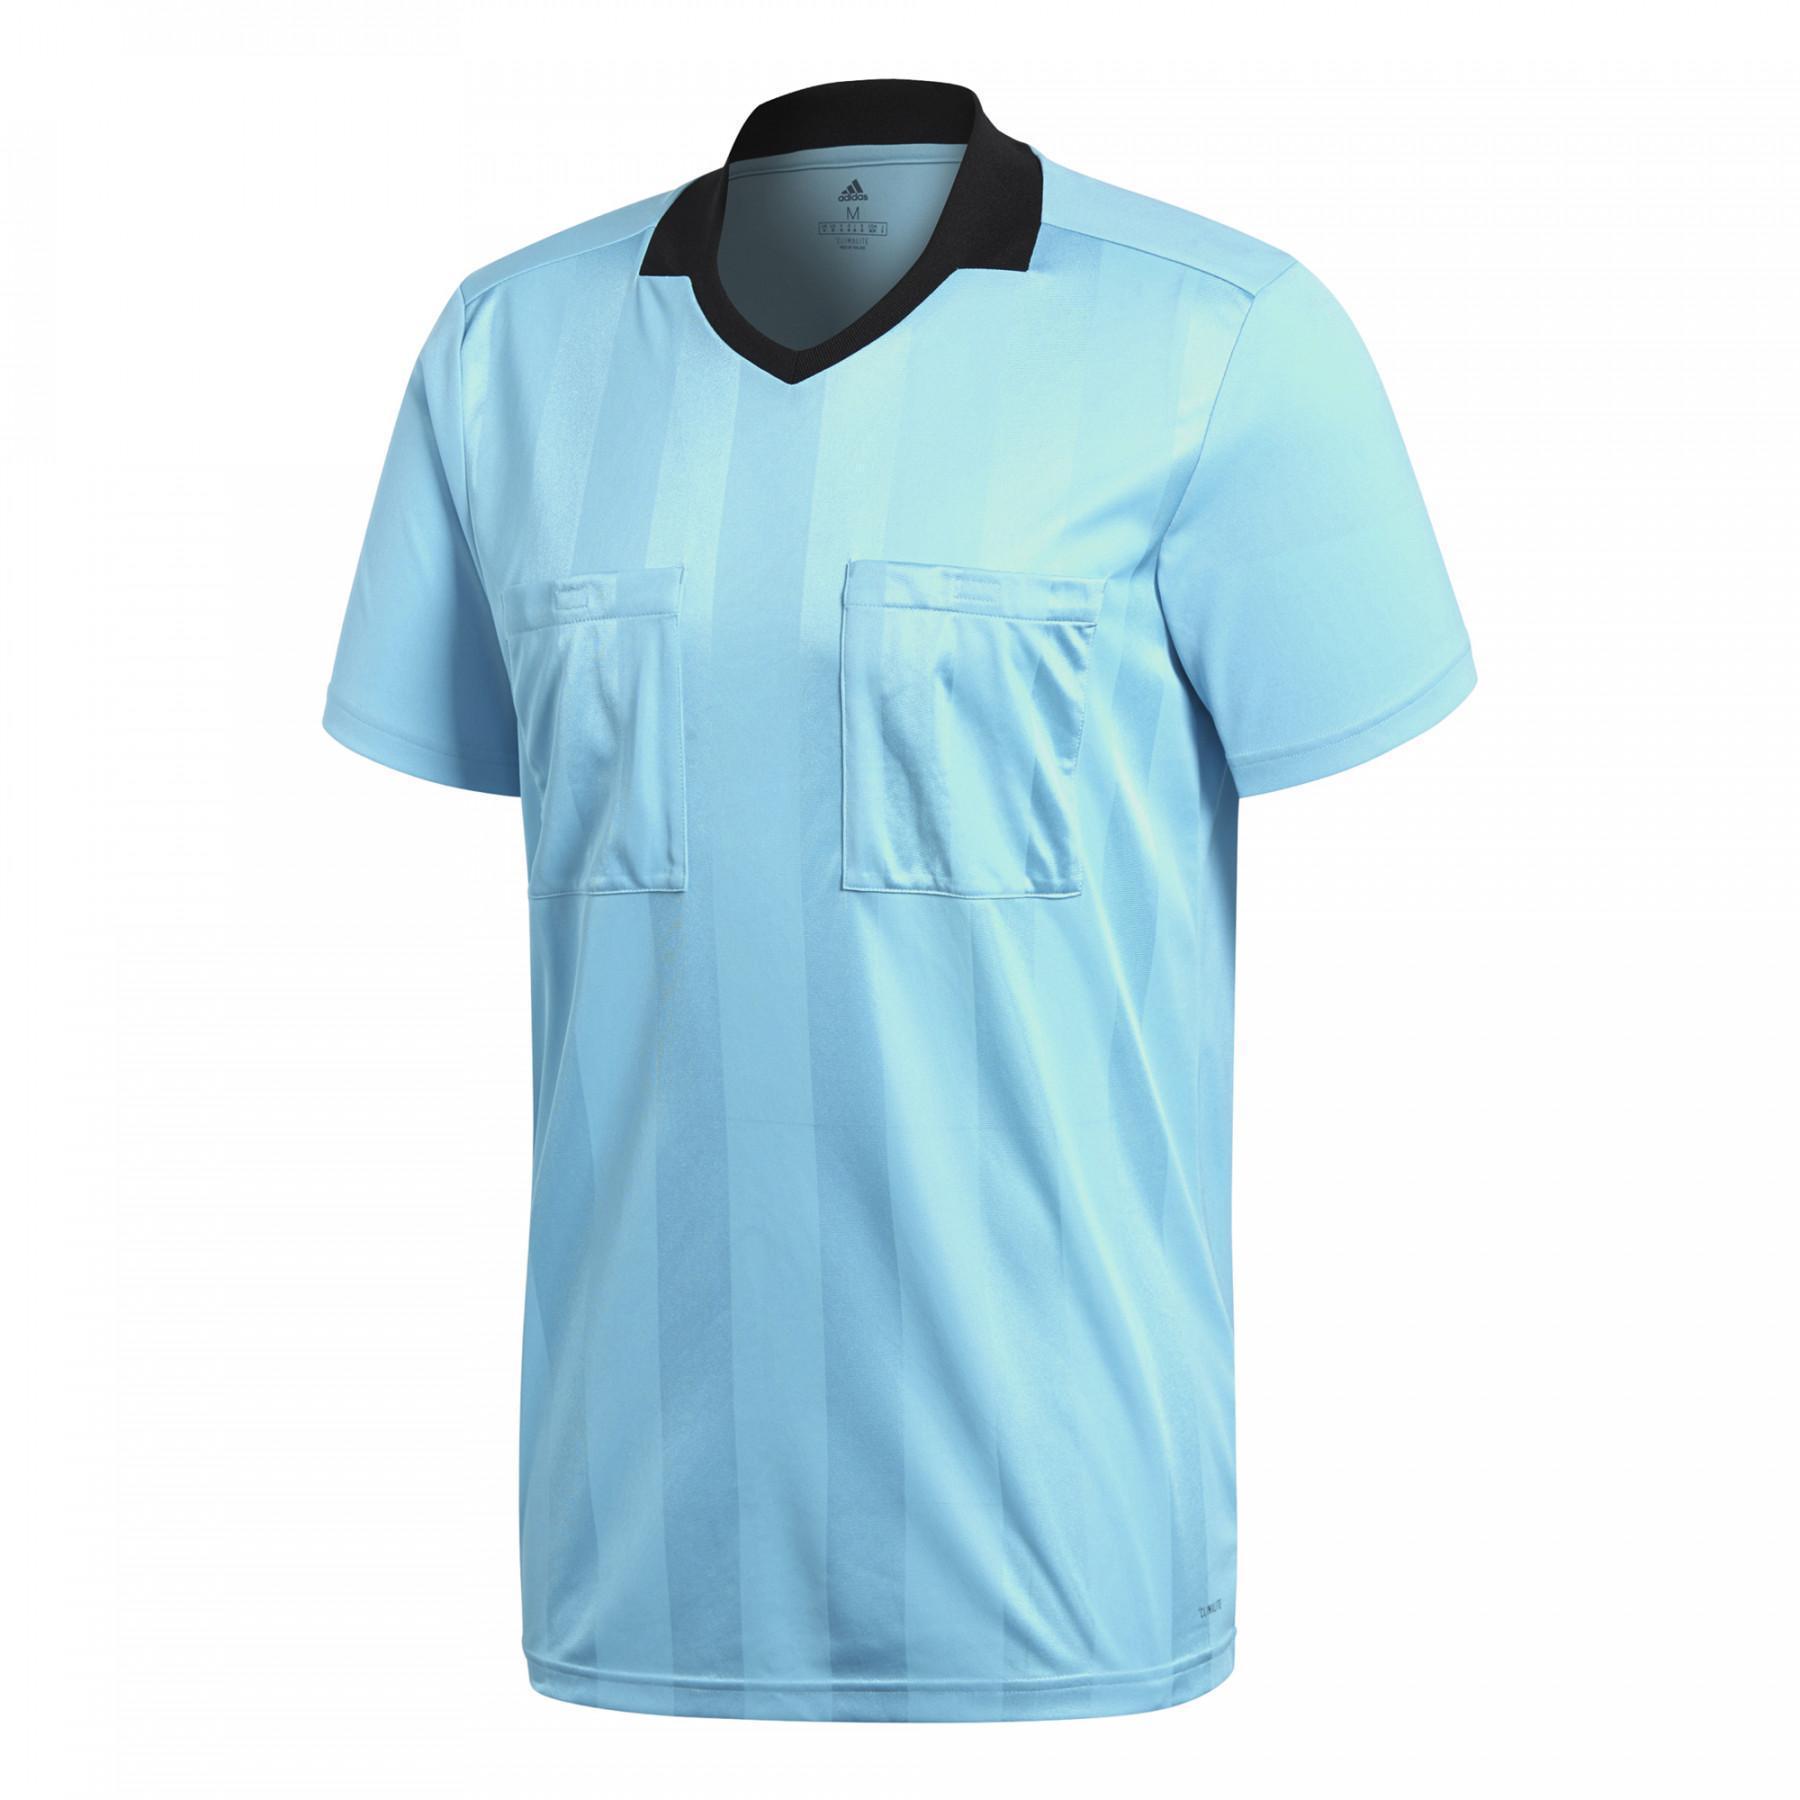 Camiseta adidas árbitro Ref 18 azul celeste